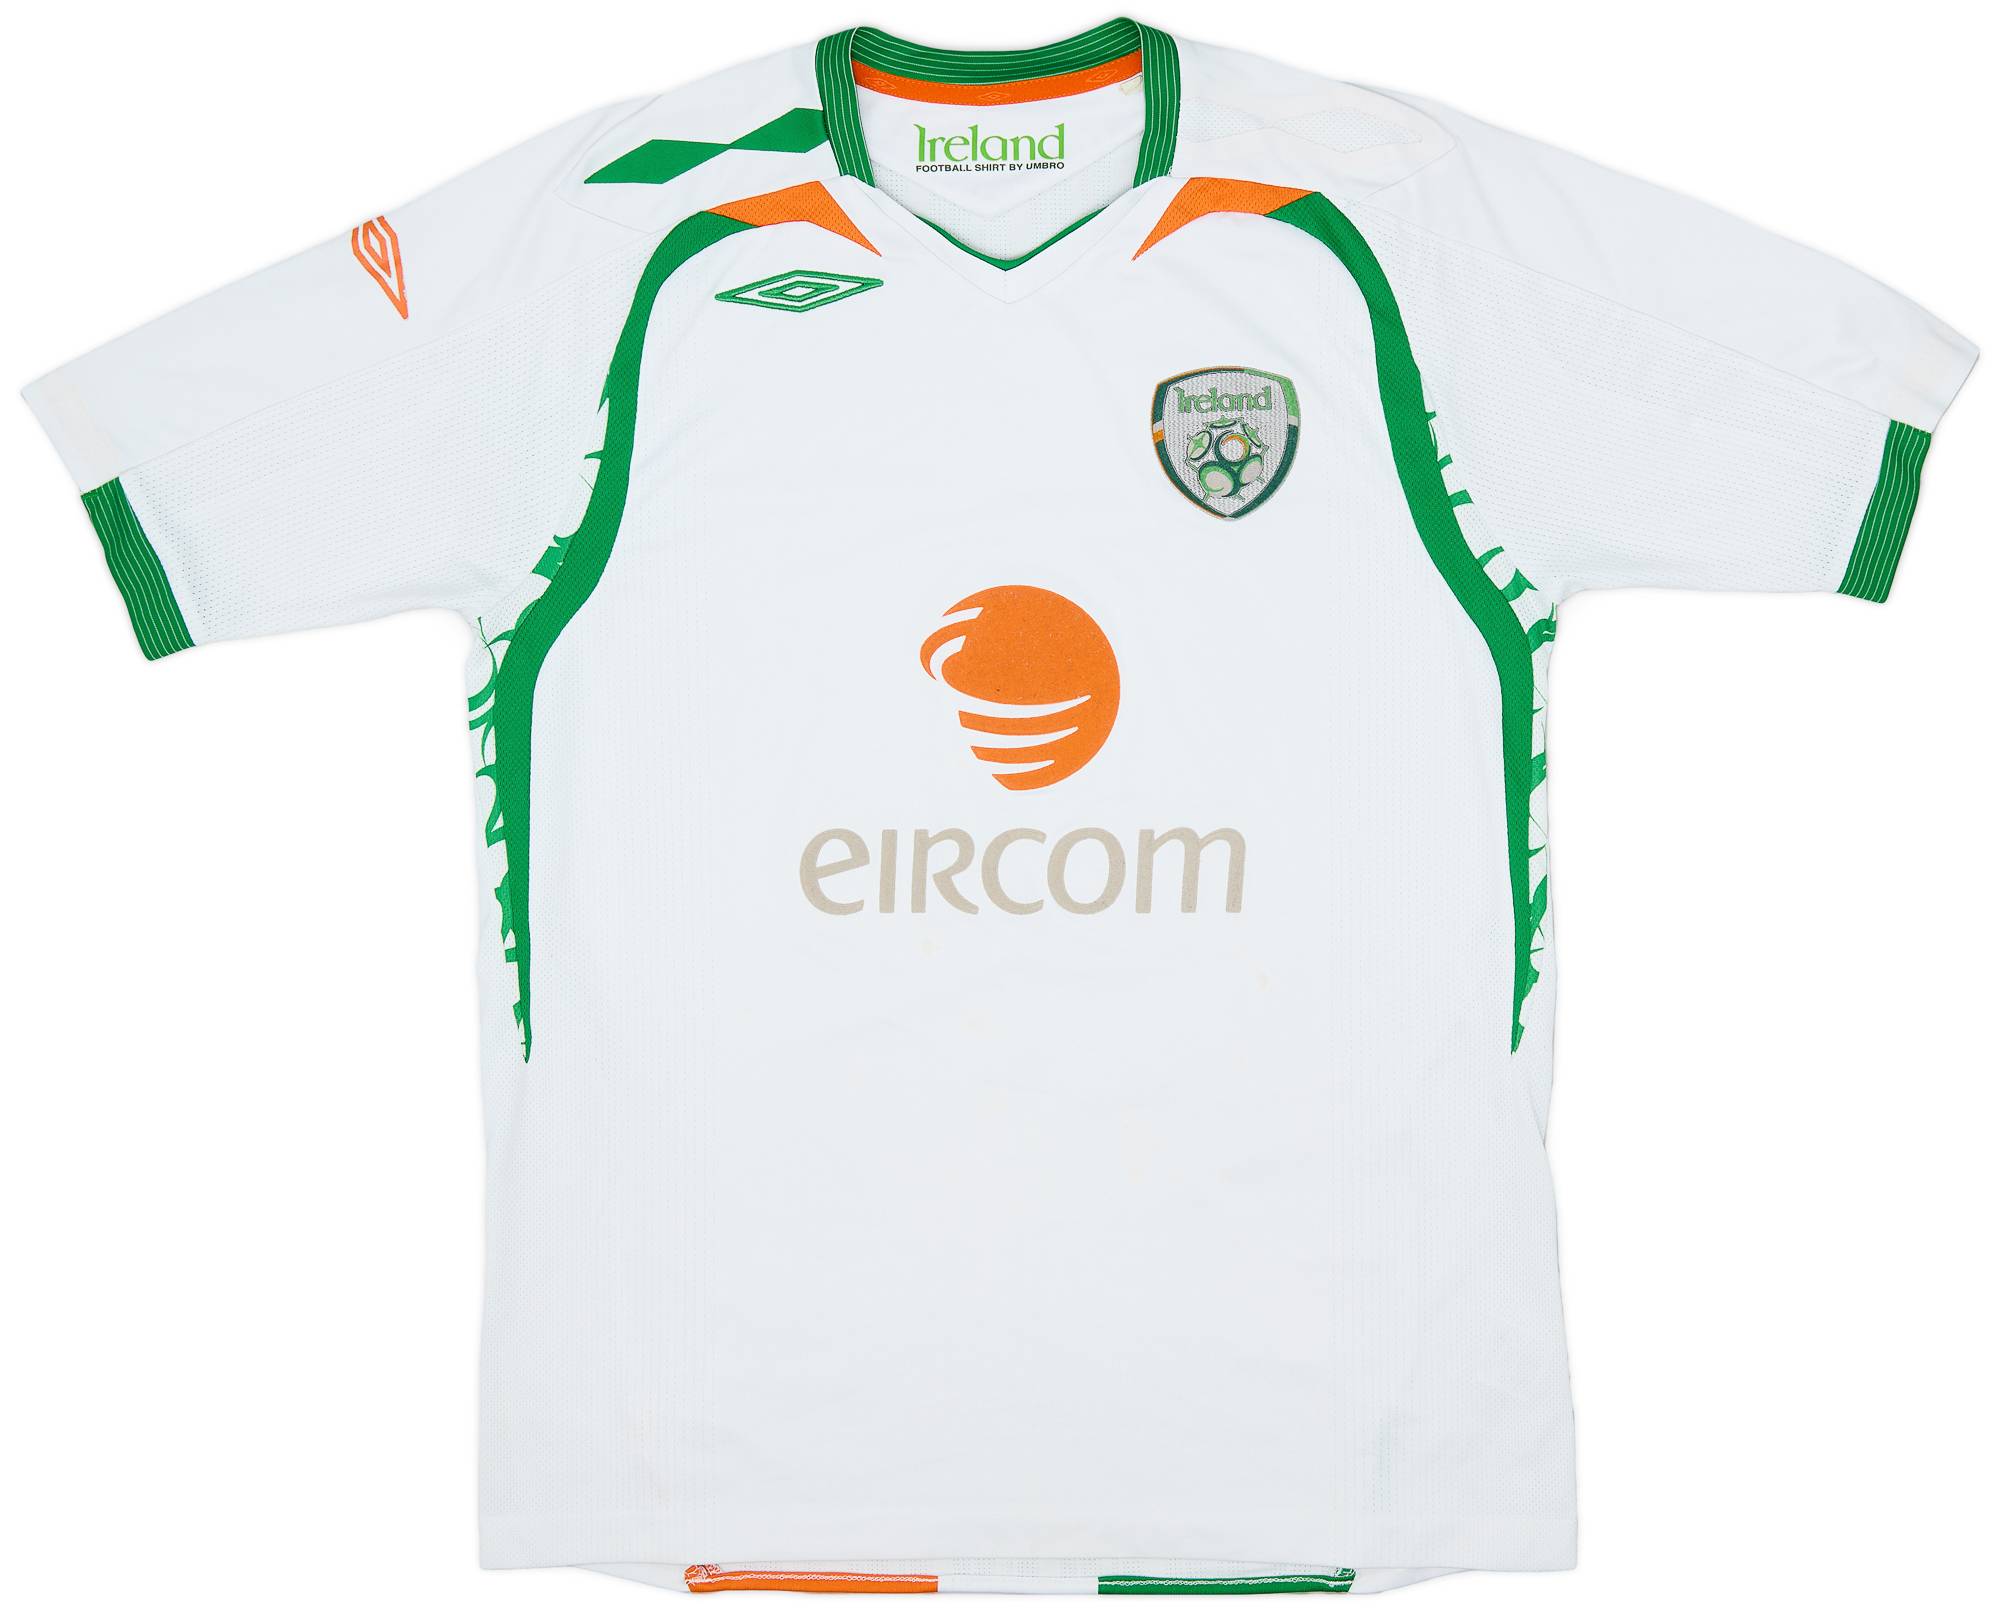 2008-10 Ireland Away Shirt - 6/10 - (M)